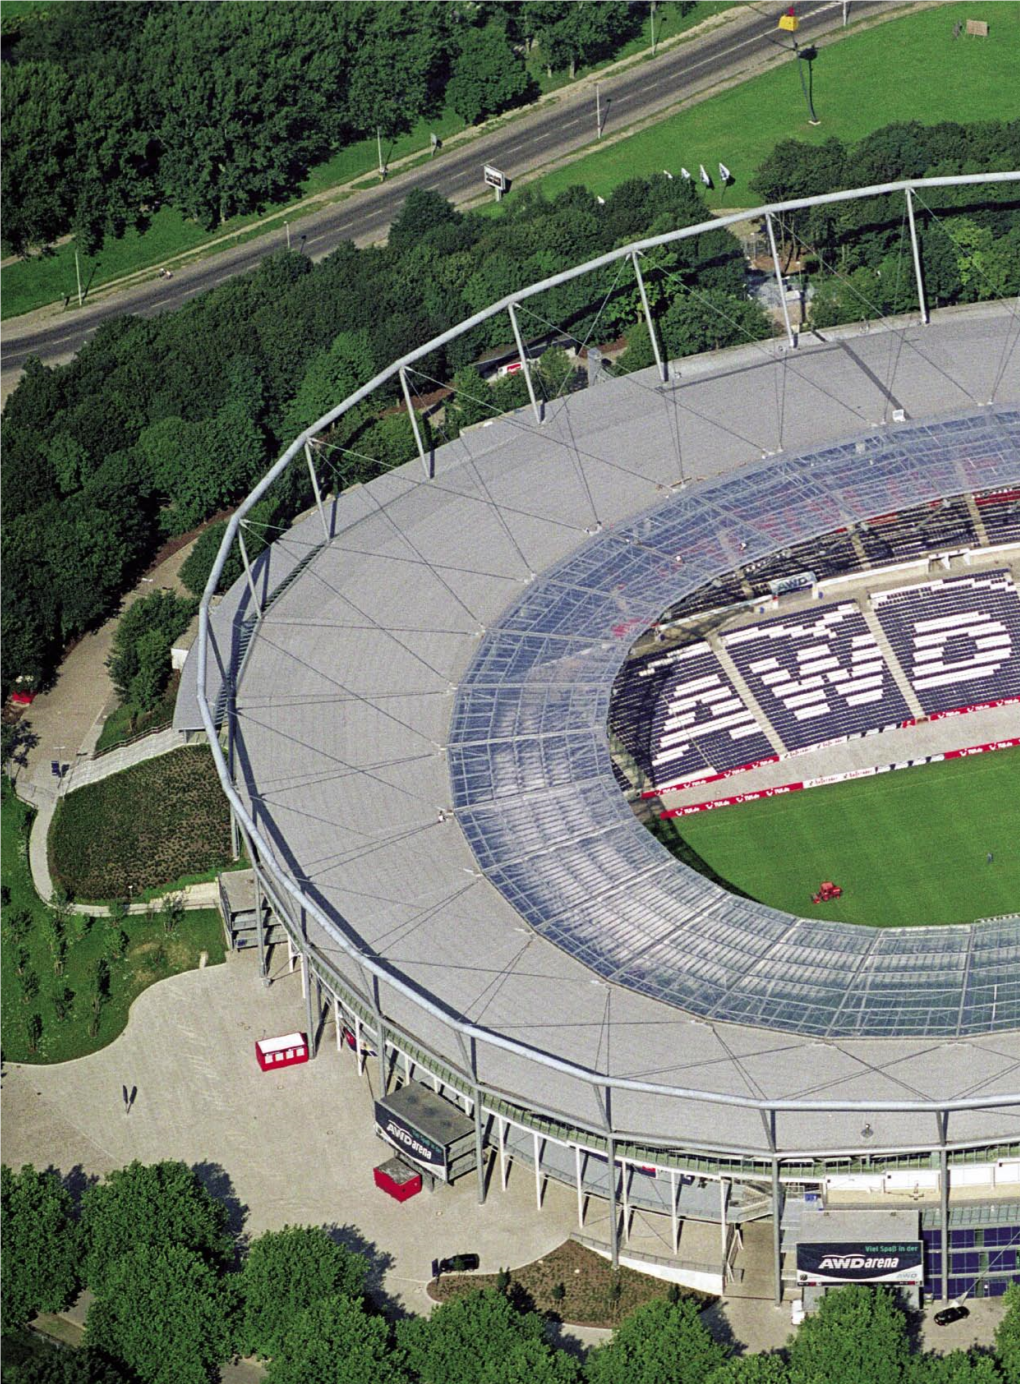 102-117 Fifa-Wm-Stadion Hannover4.Indd